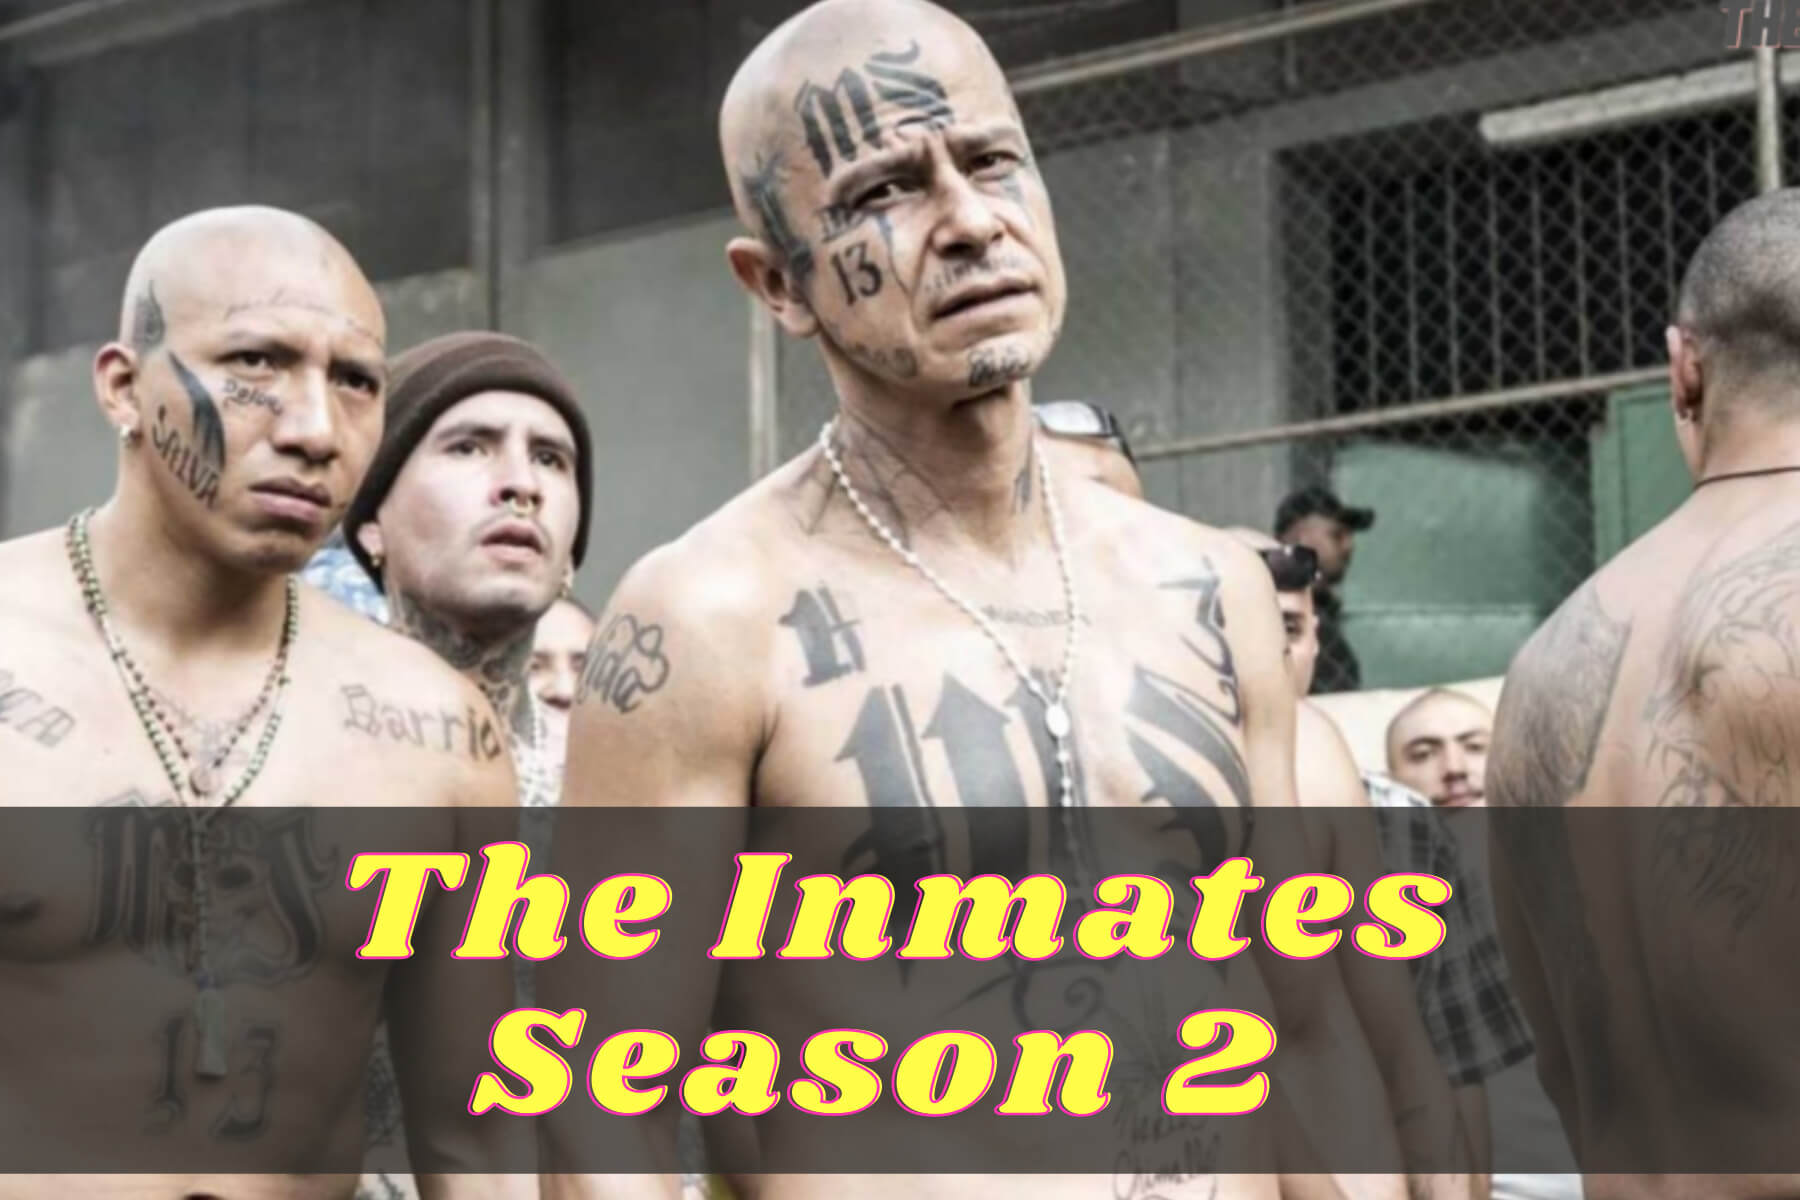 The Inmates Season 2